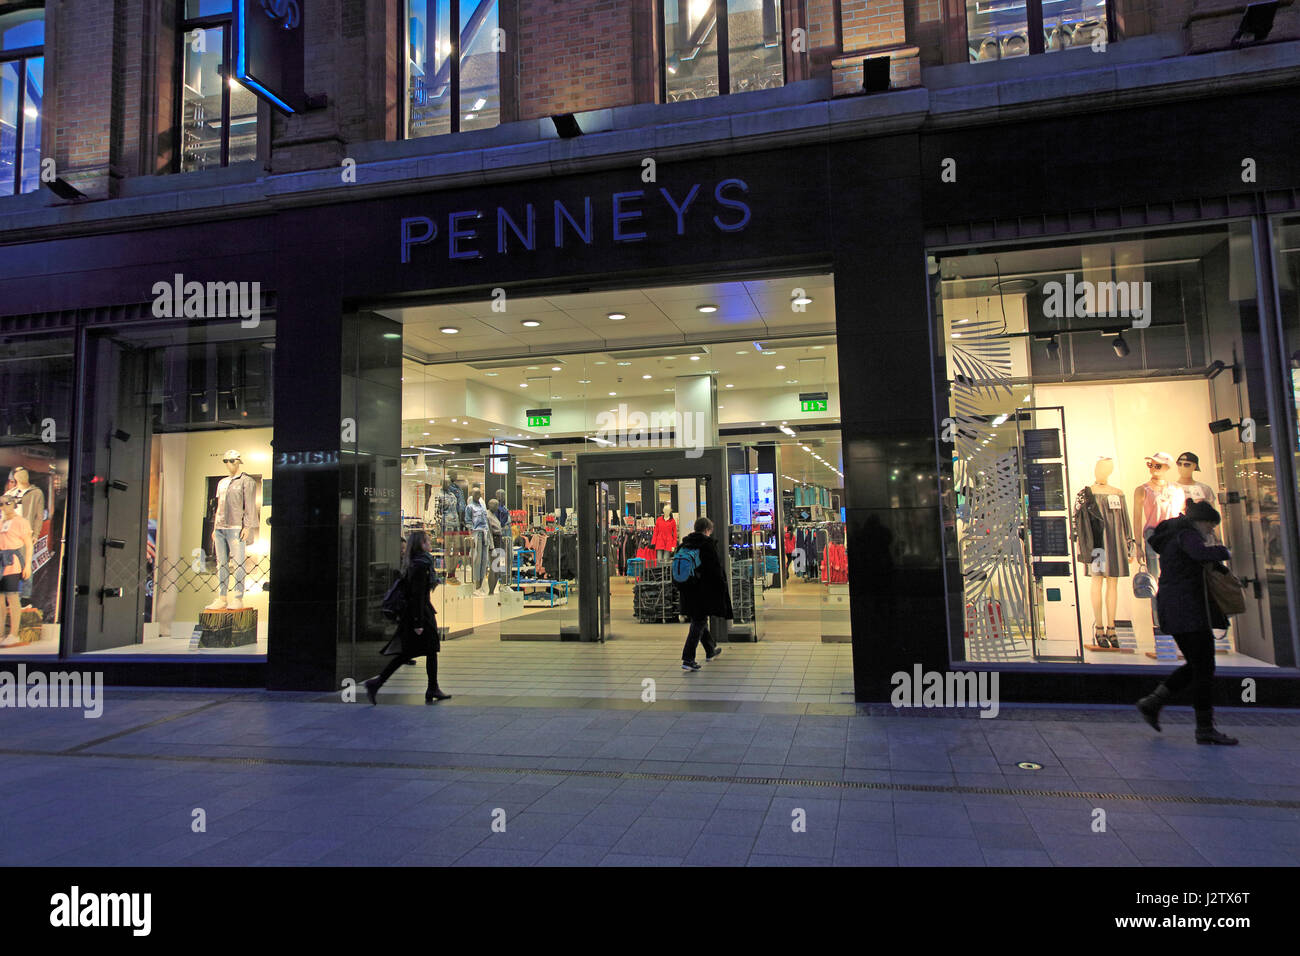 Penneys department store shop at night, city of Dublin, Ireland, Irish Republic Stock Photo